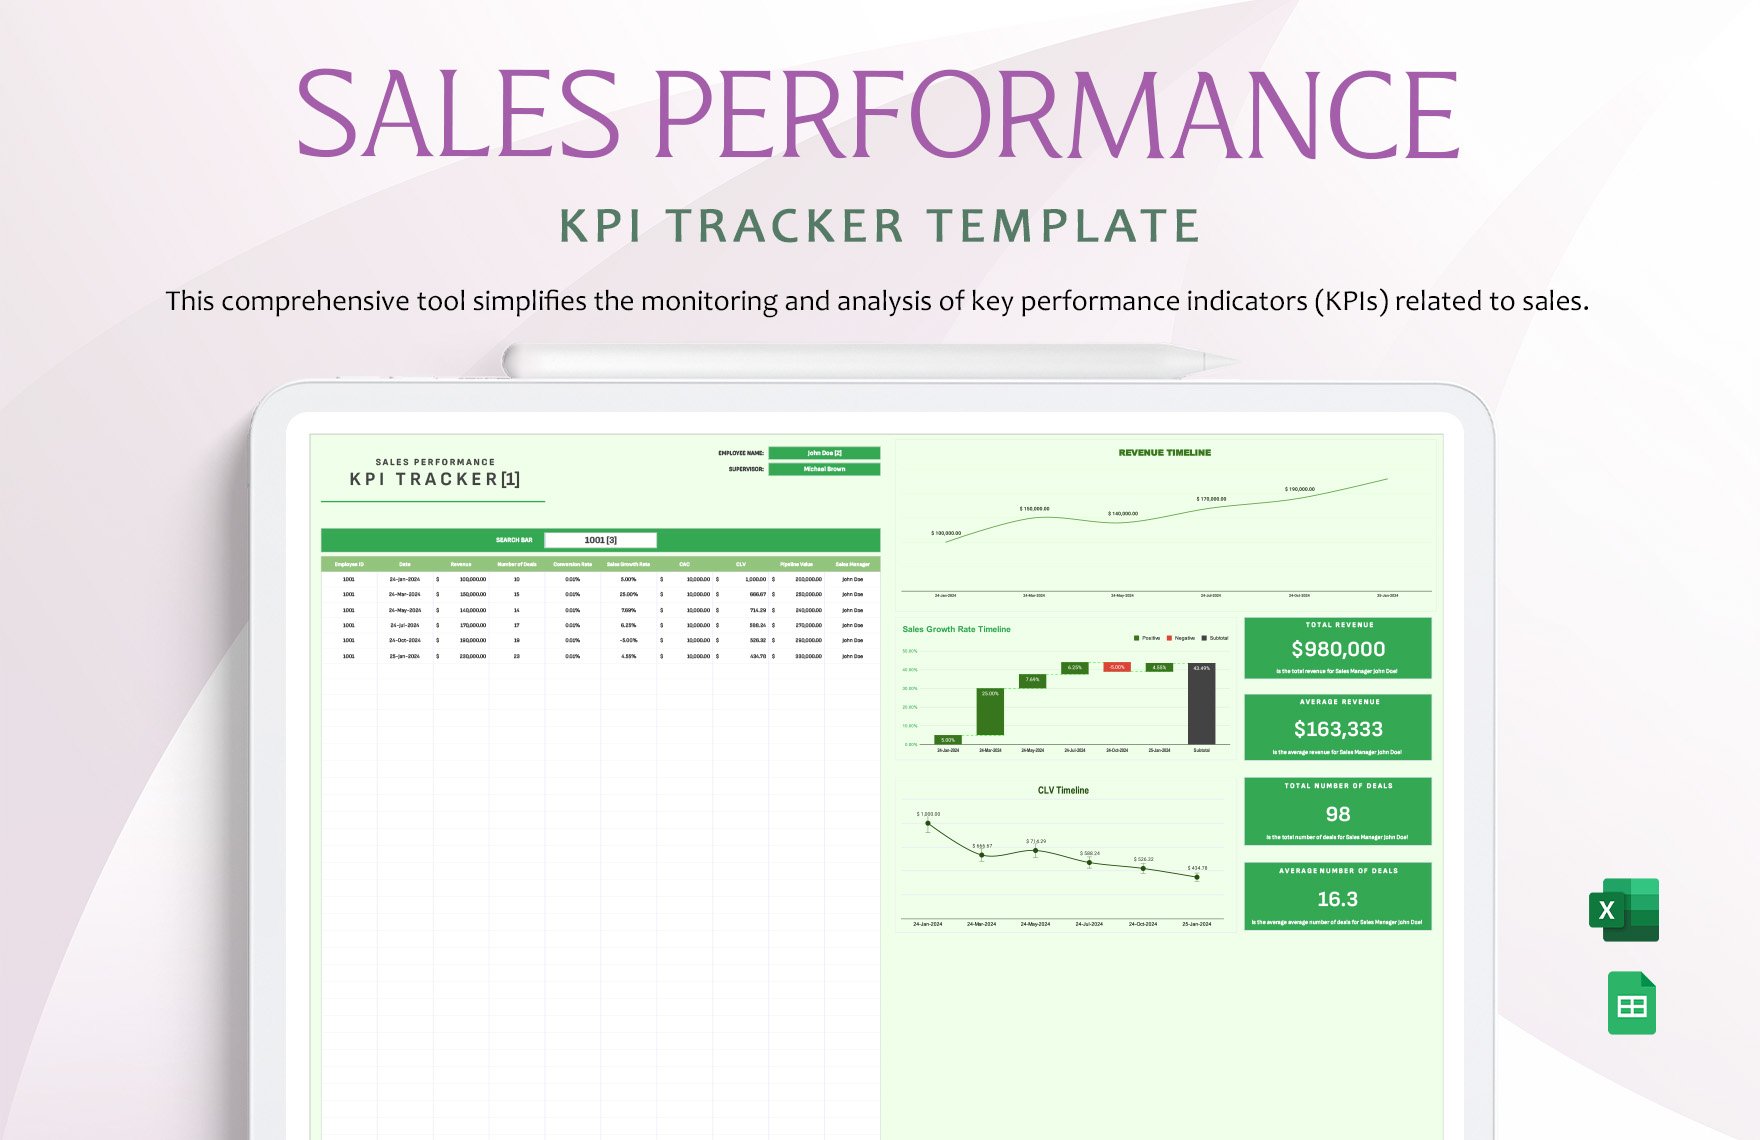 Sales Performance KPI Tracker Template